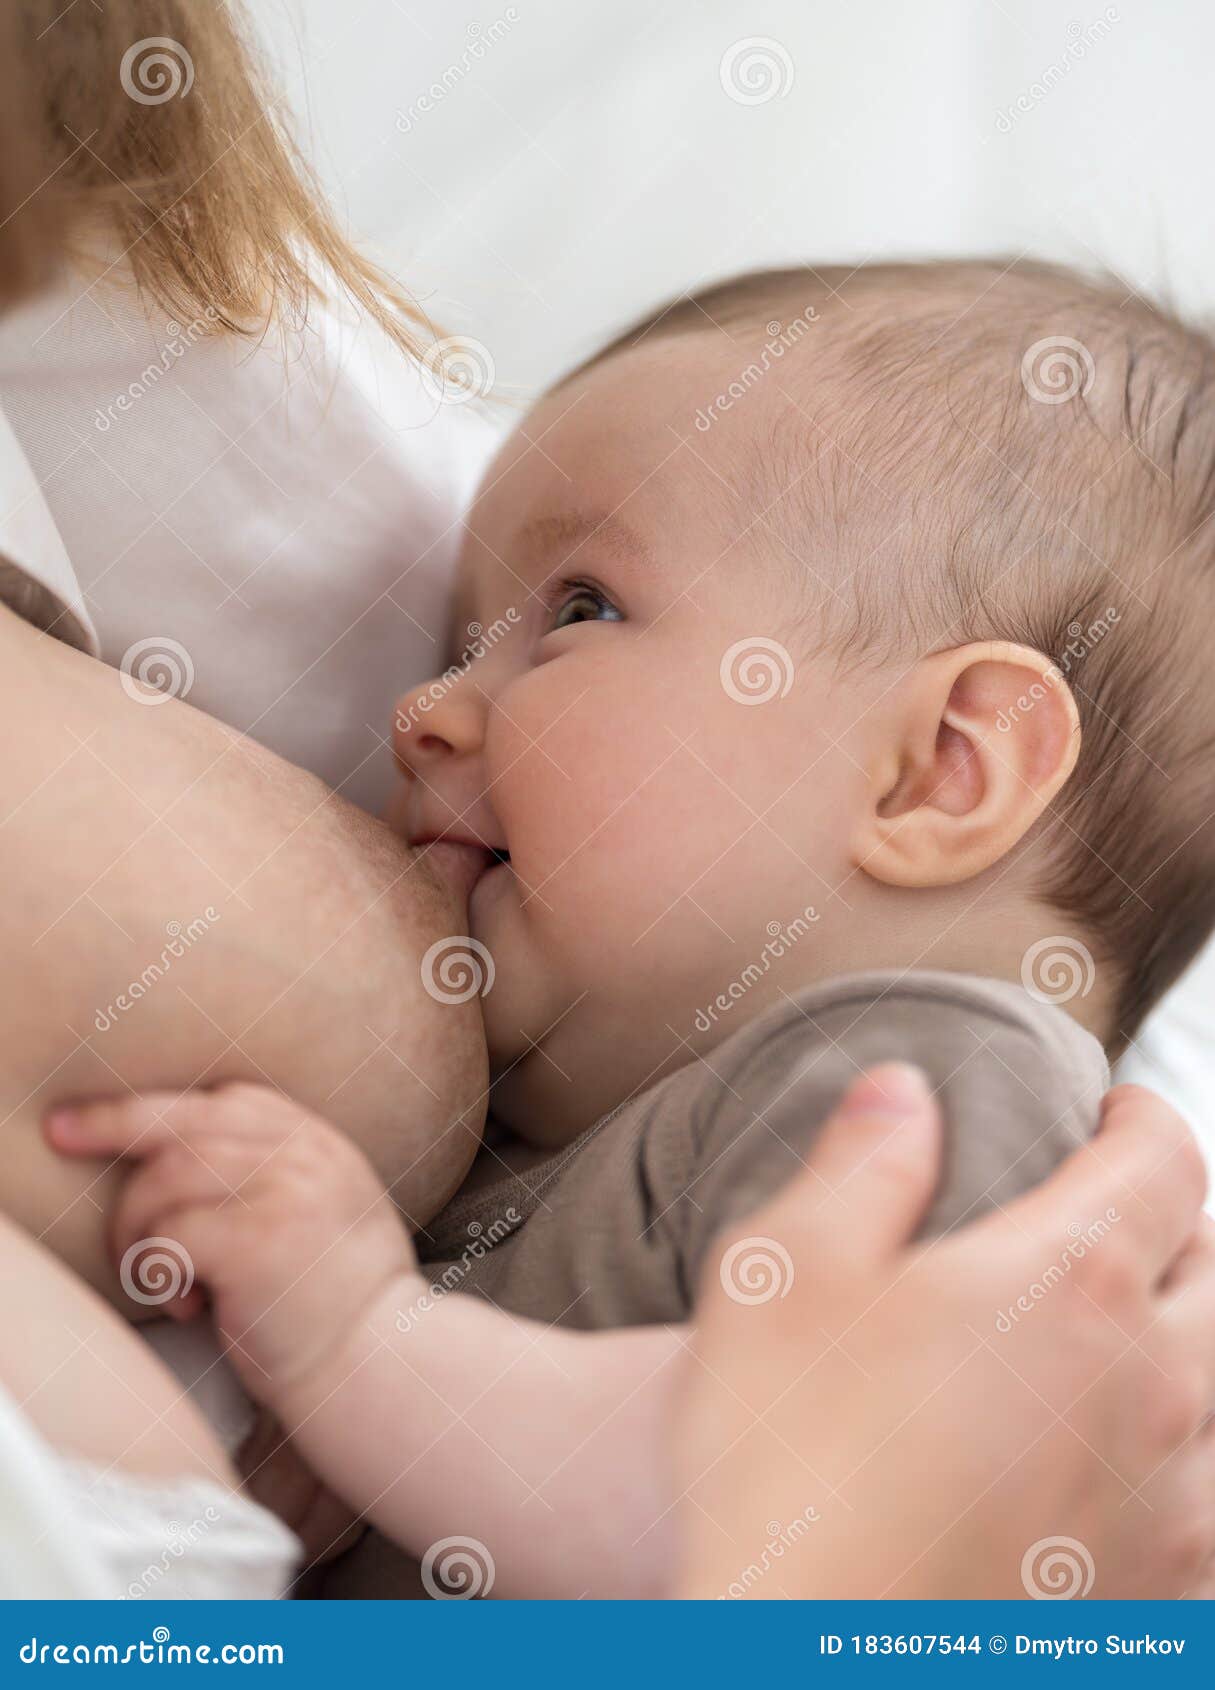 Breast Feeding of a Newborn Baby Girl Stock Photo - Image of 2530, feeding:  183607544